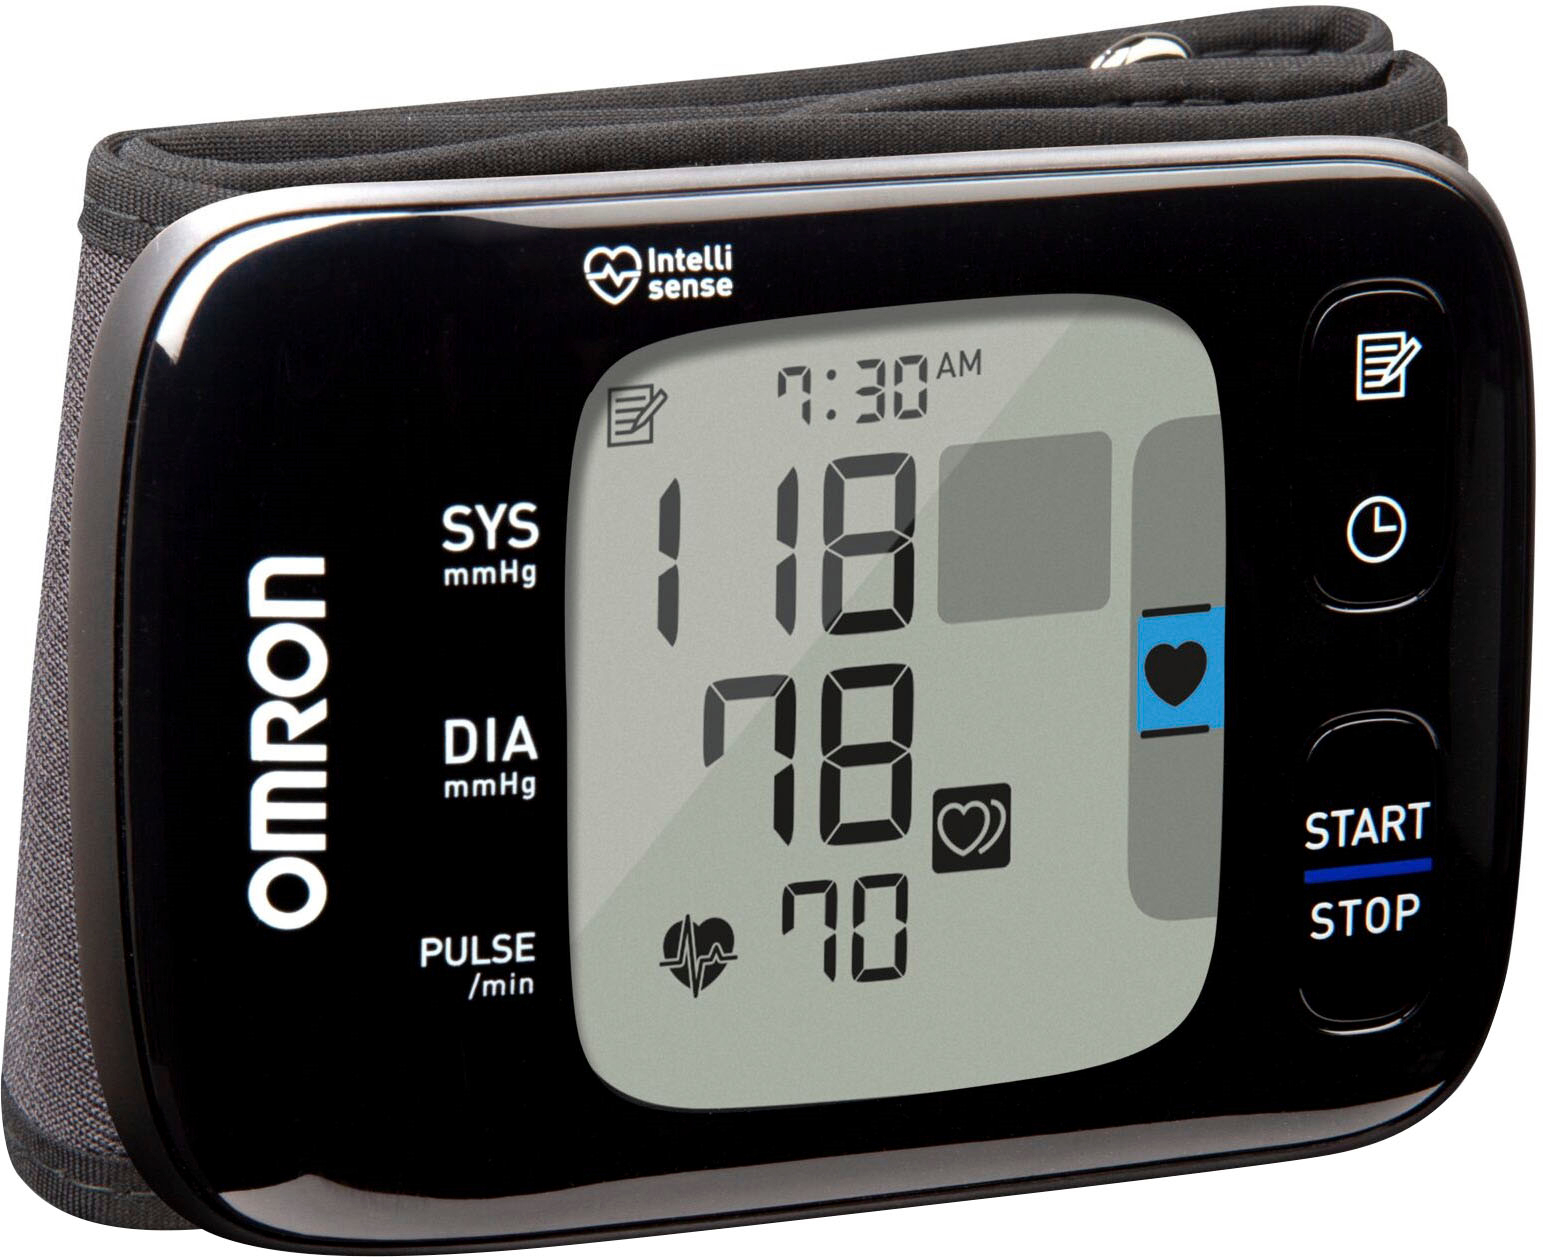 Omron 3 Series Automatic Upper Arm Blood Pressure Monitor Black/White  BP7100 - Best Buy